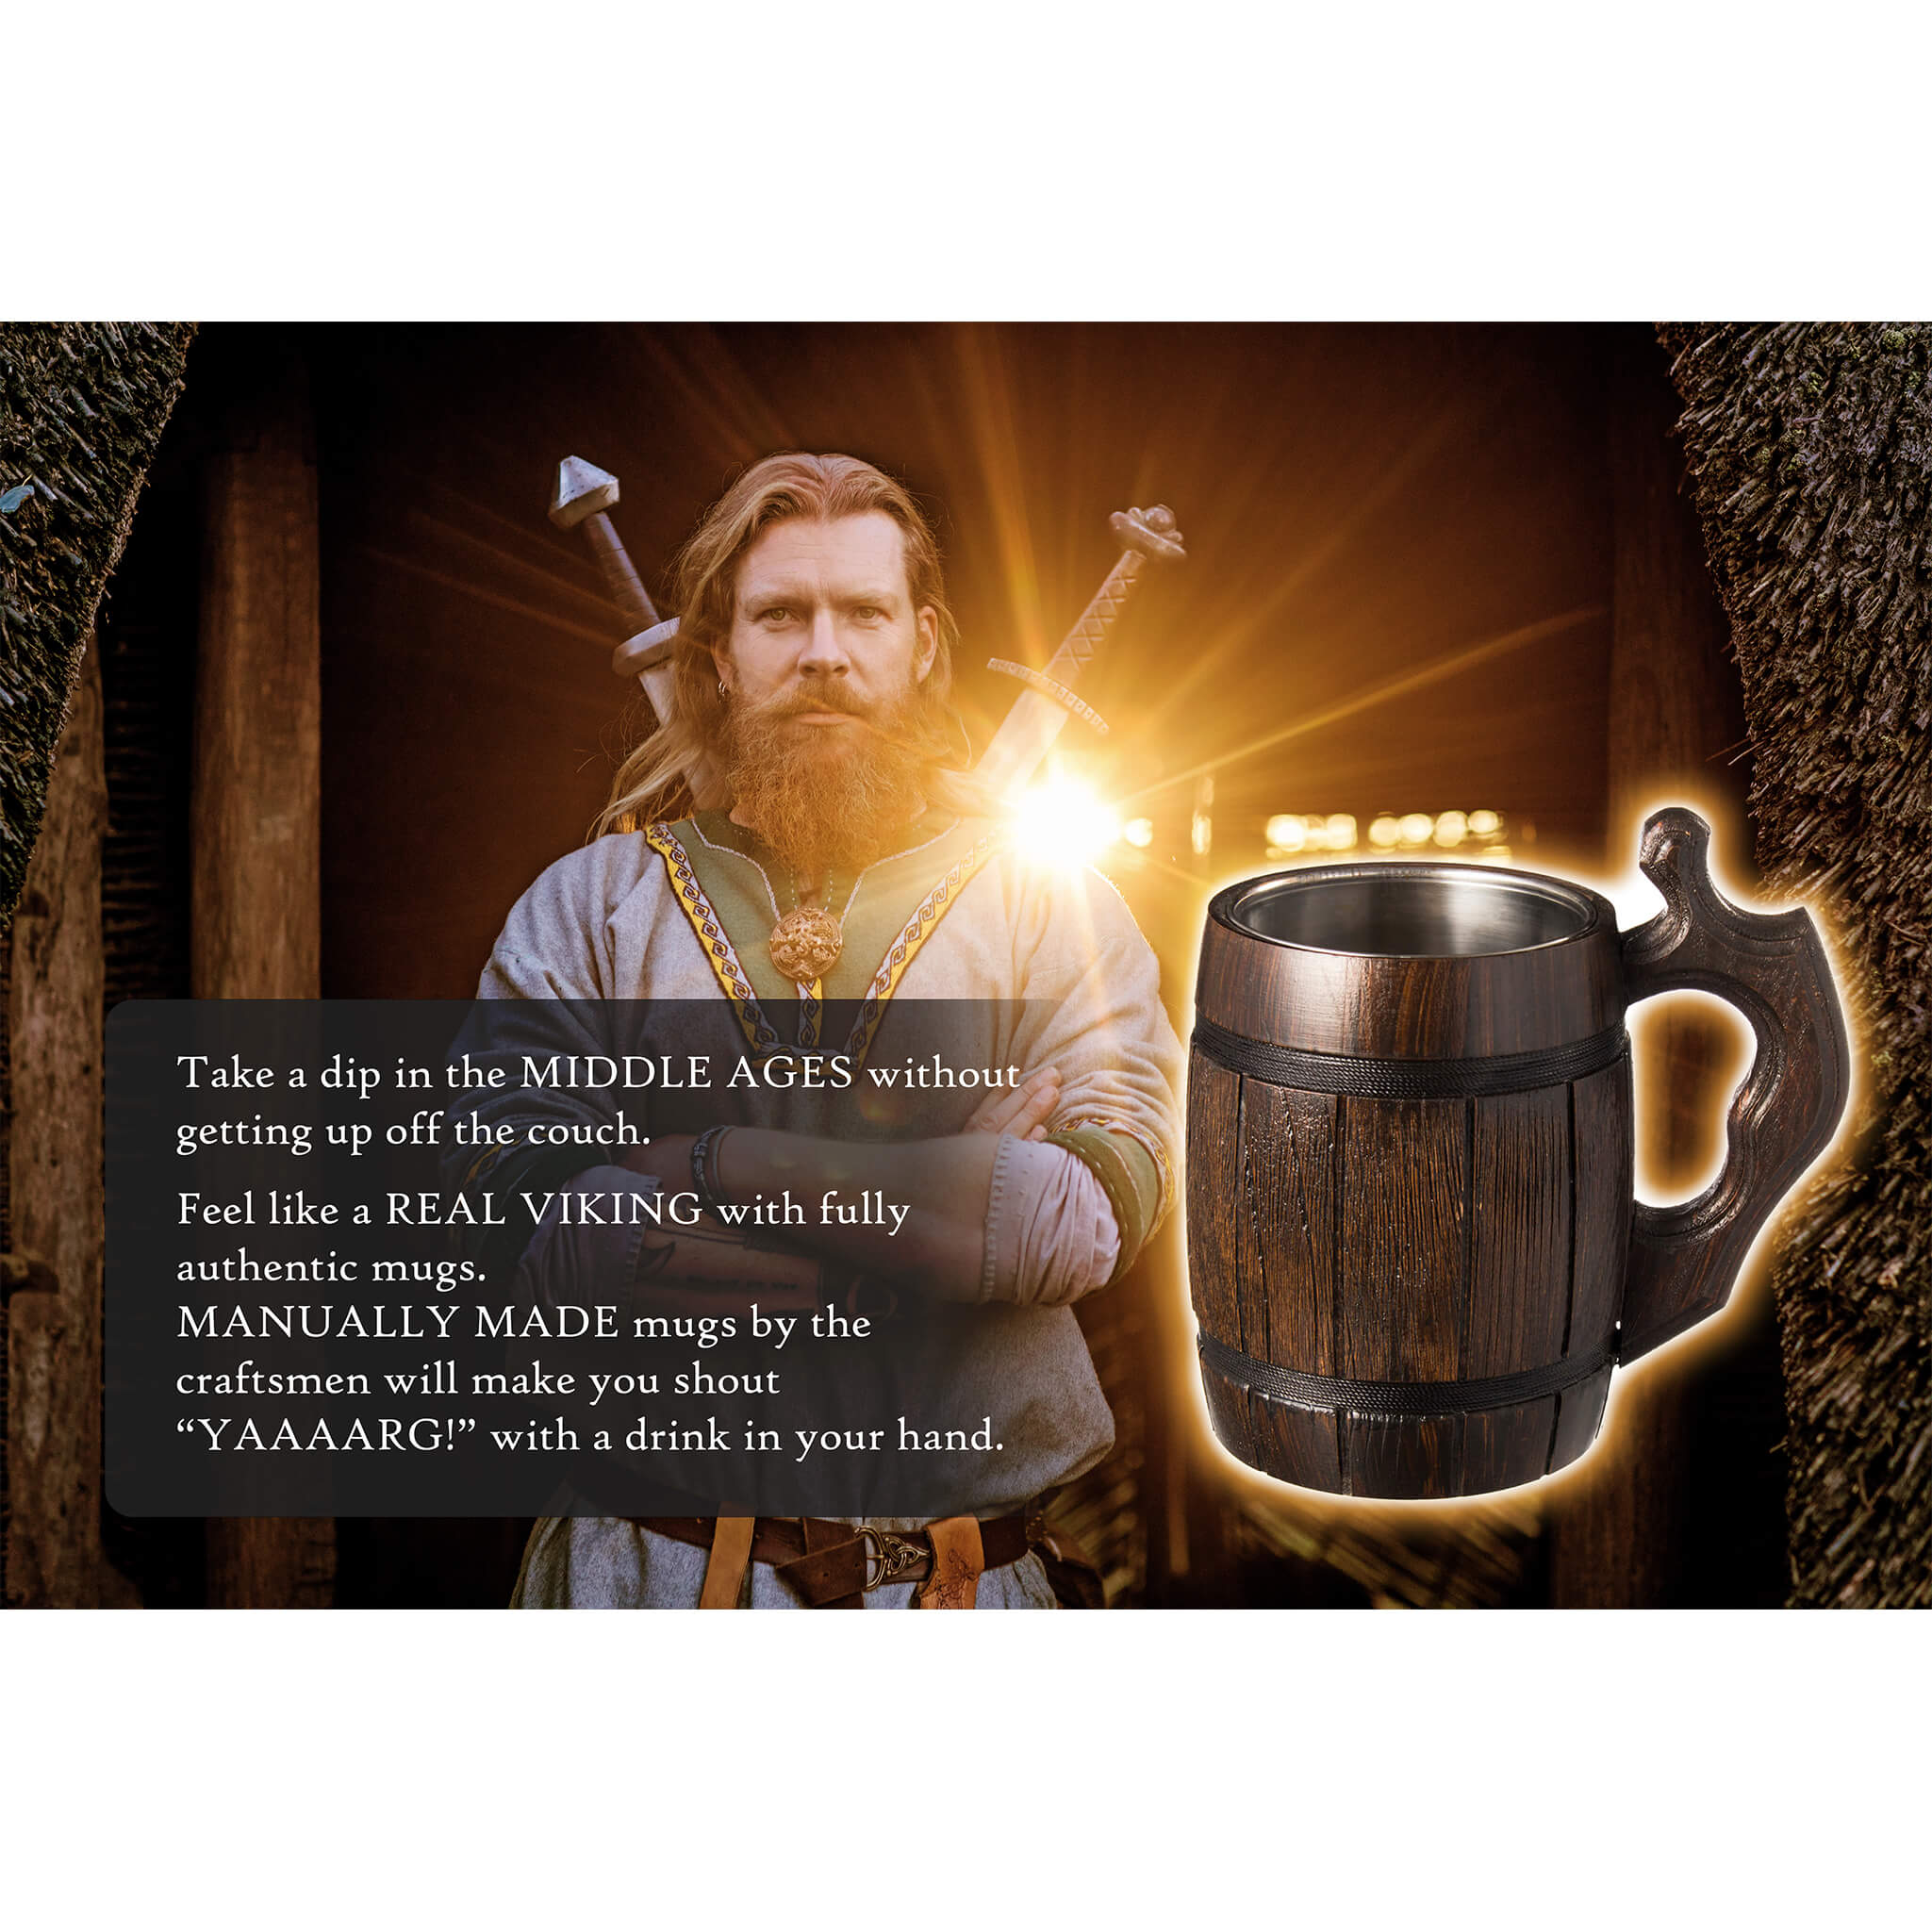 Oak Barrel Beer Mug (20oz/568ml)